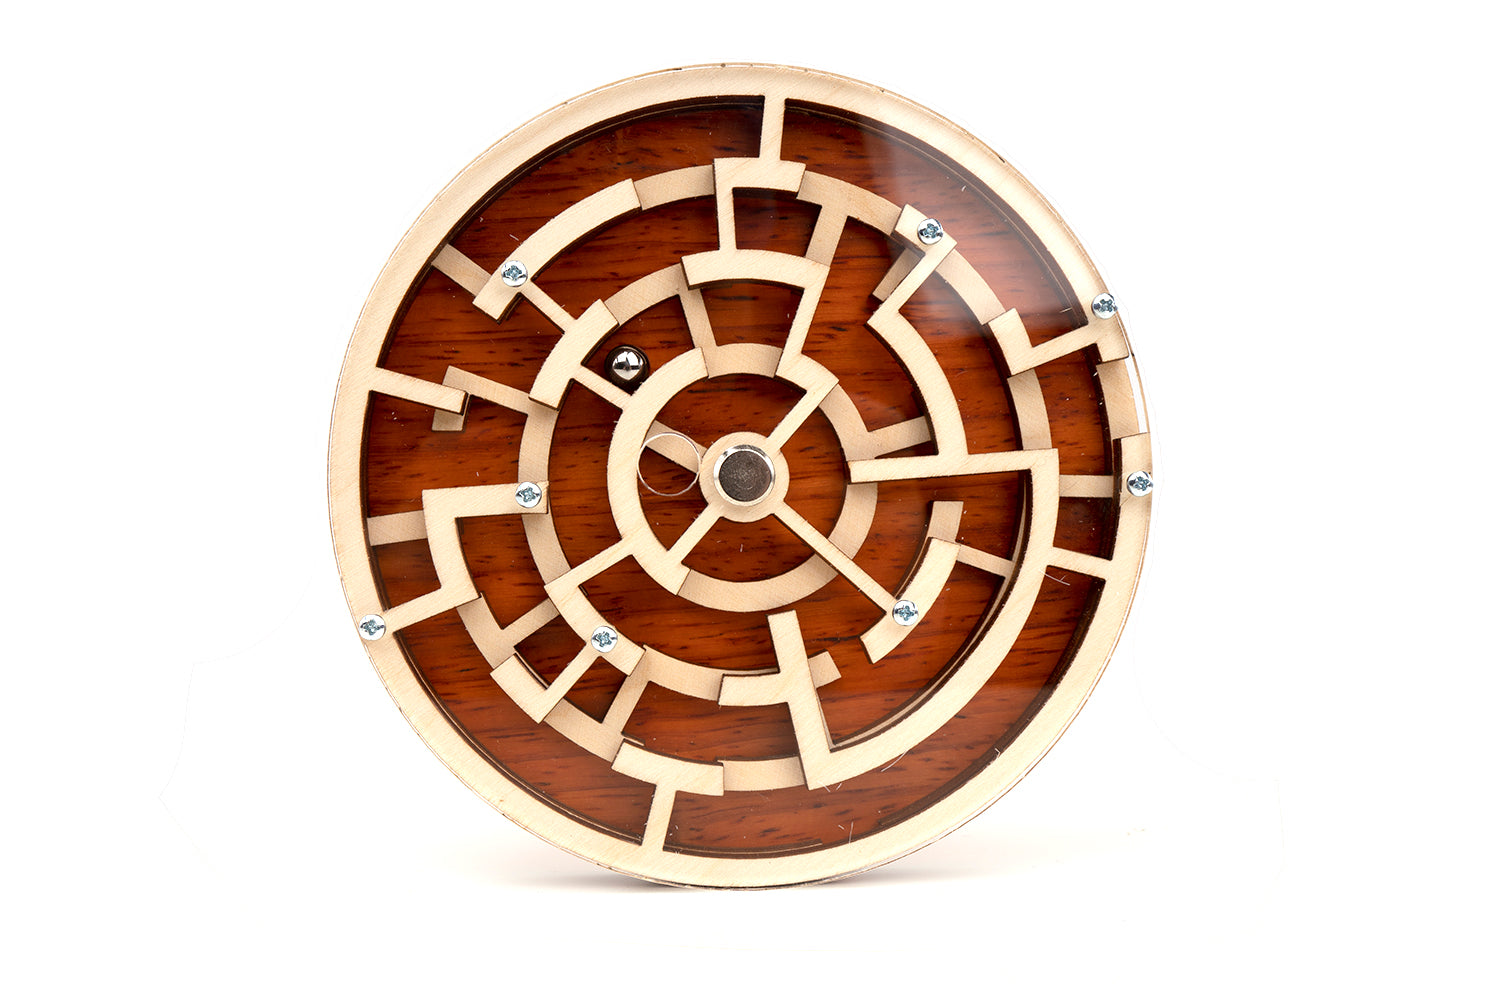 labyrinth maze game